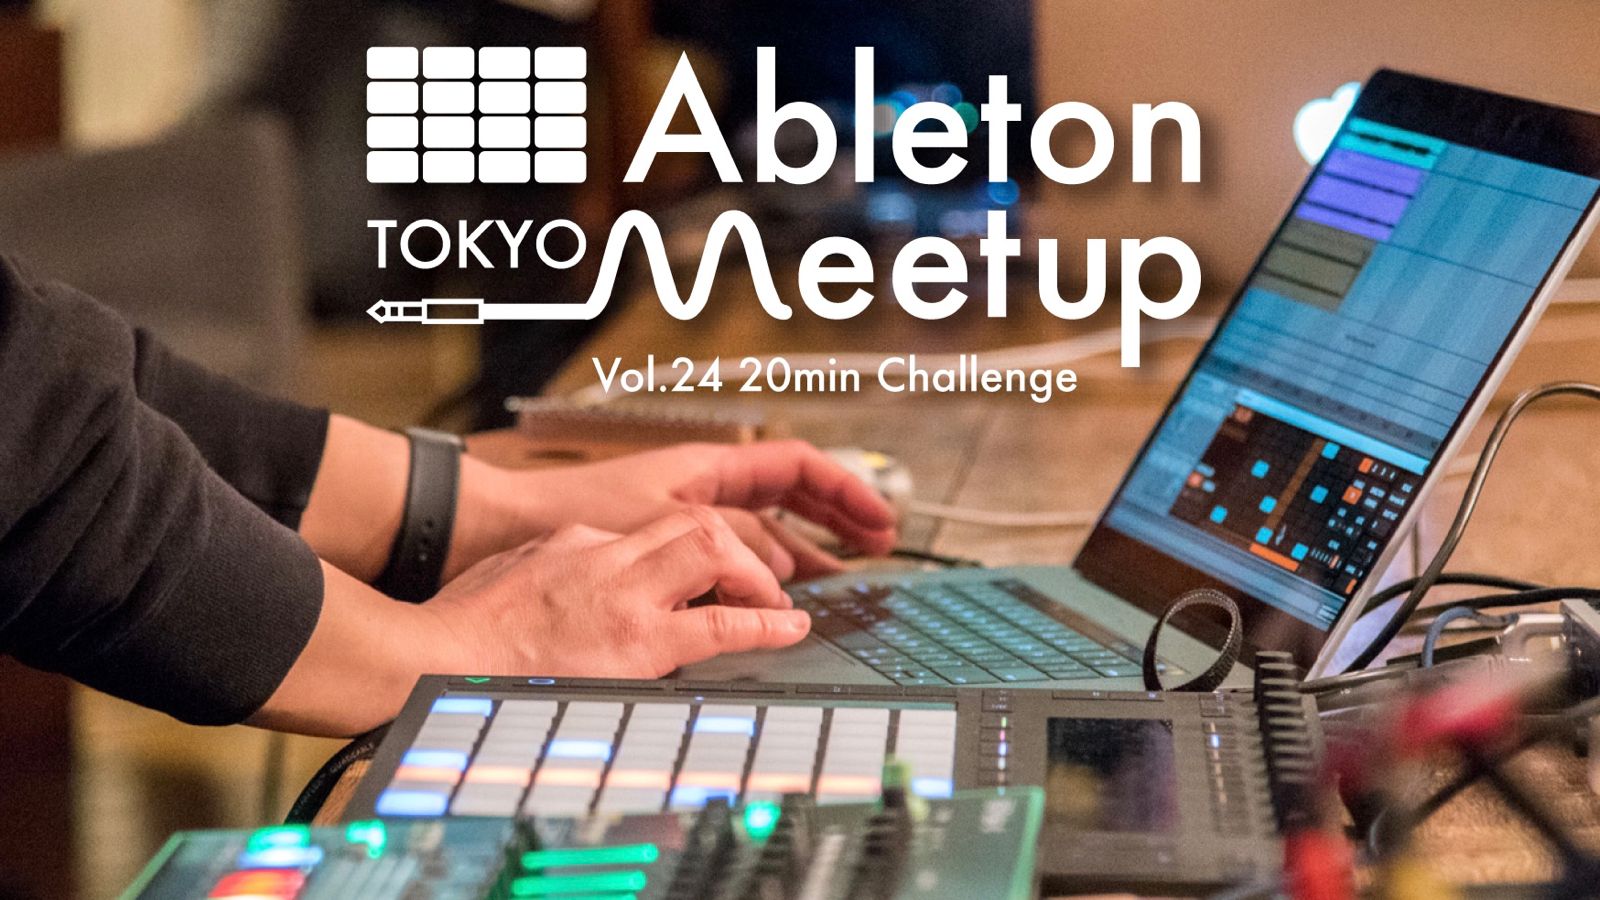 Ableton Meetup Tokyo Vol.24 